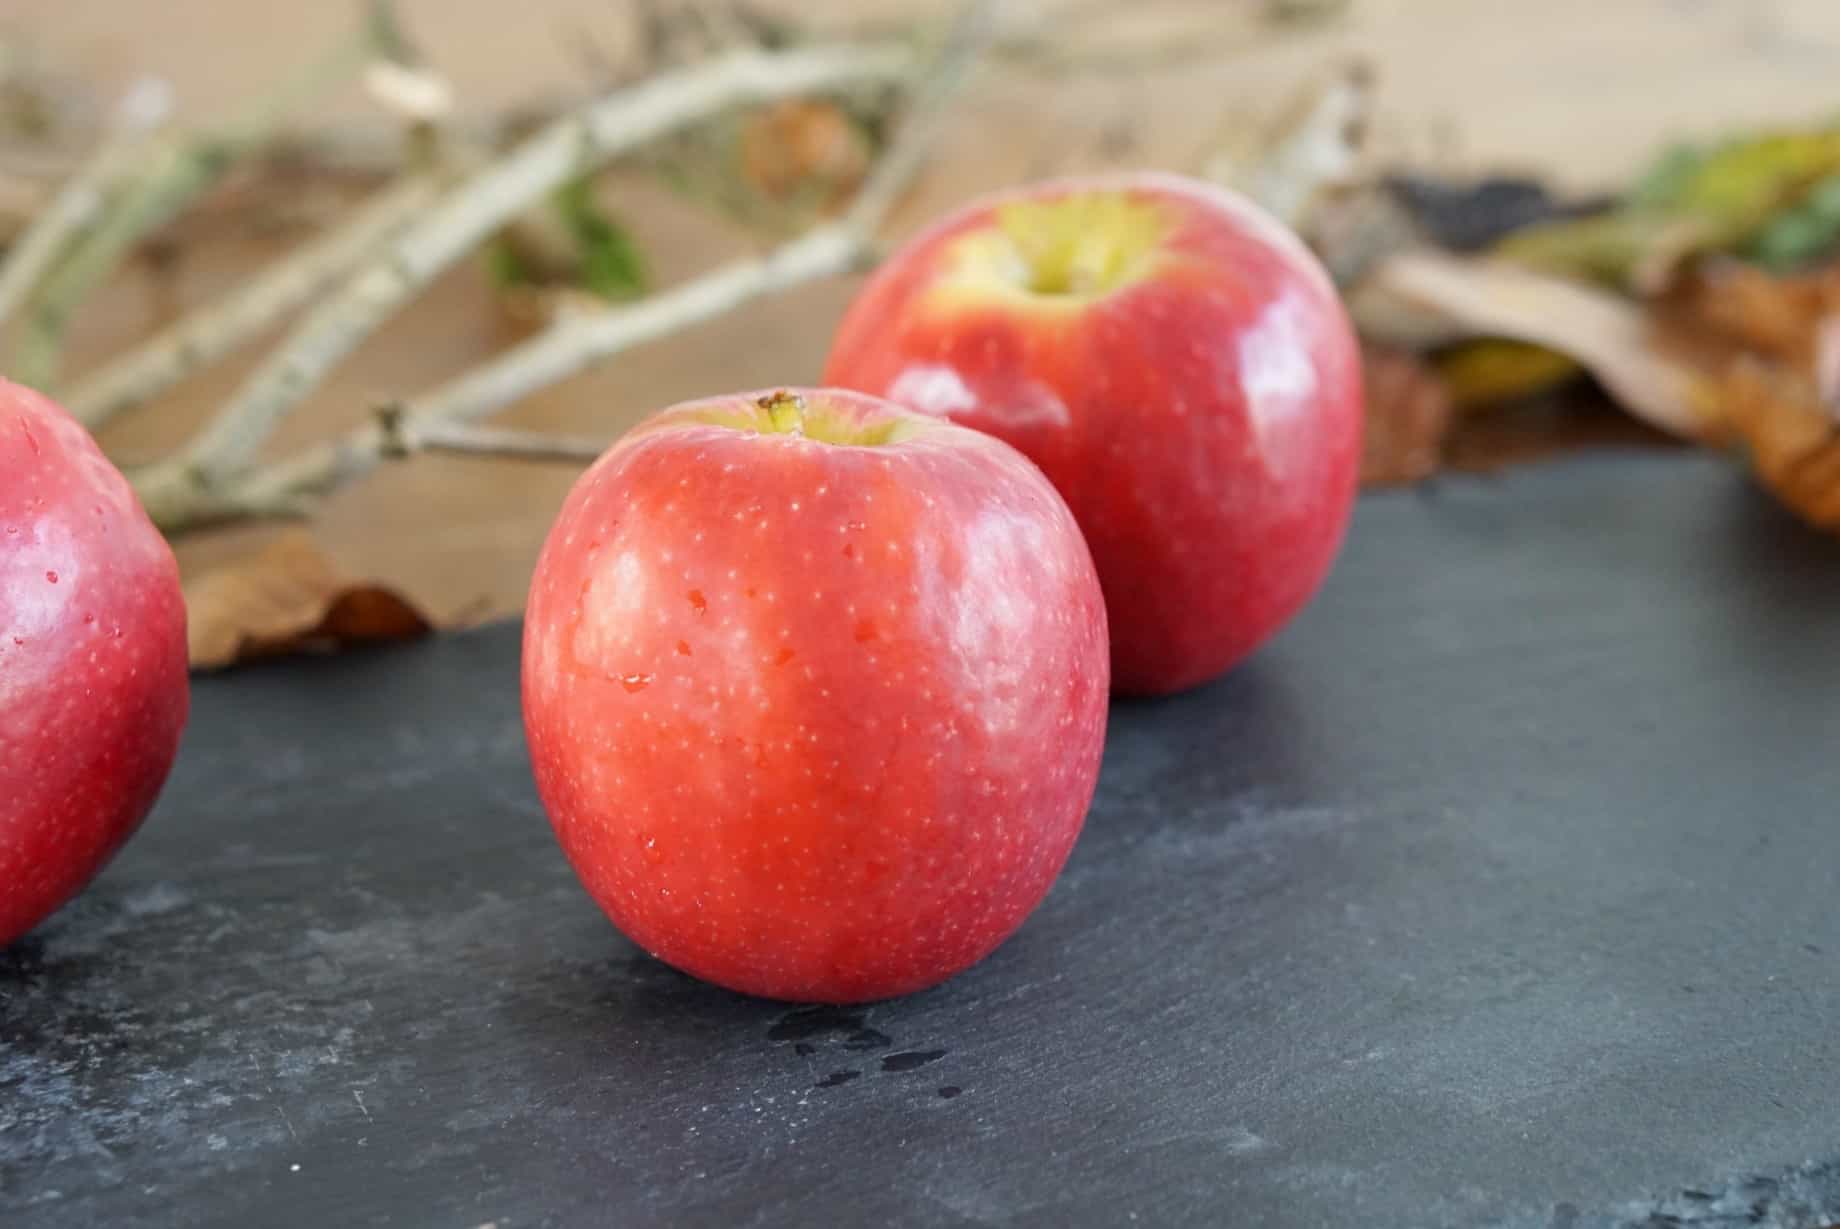 Recipe for poison apples www.extraordinarychaos.com